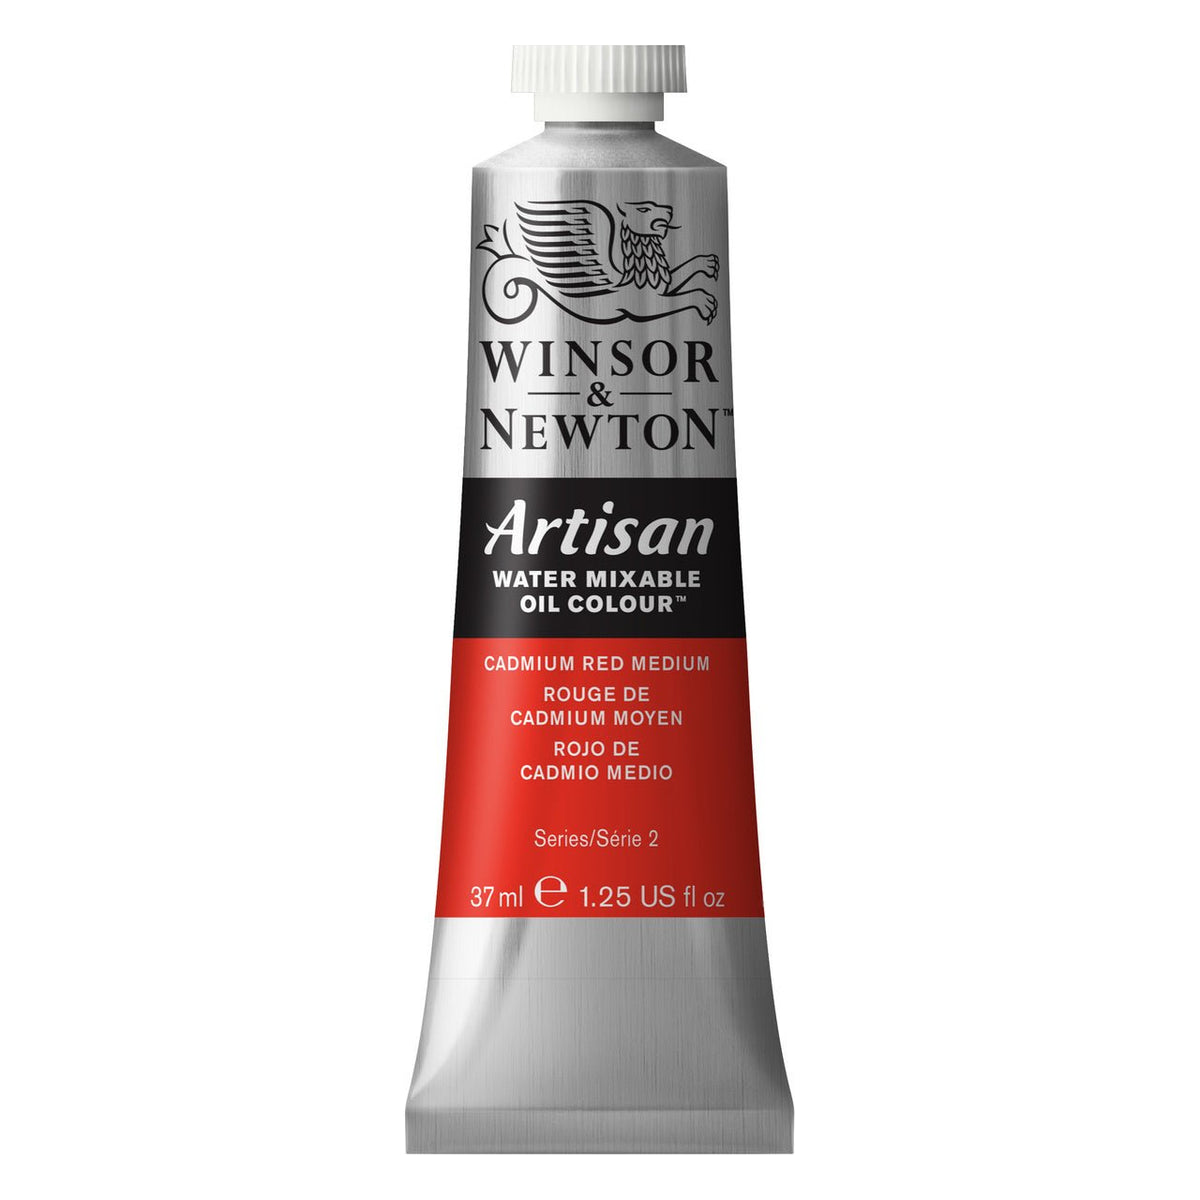 Winsor & Newton Artisan Water Mixable Oil 37ml - Cadmium Red Medium - merriartist.com